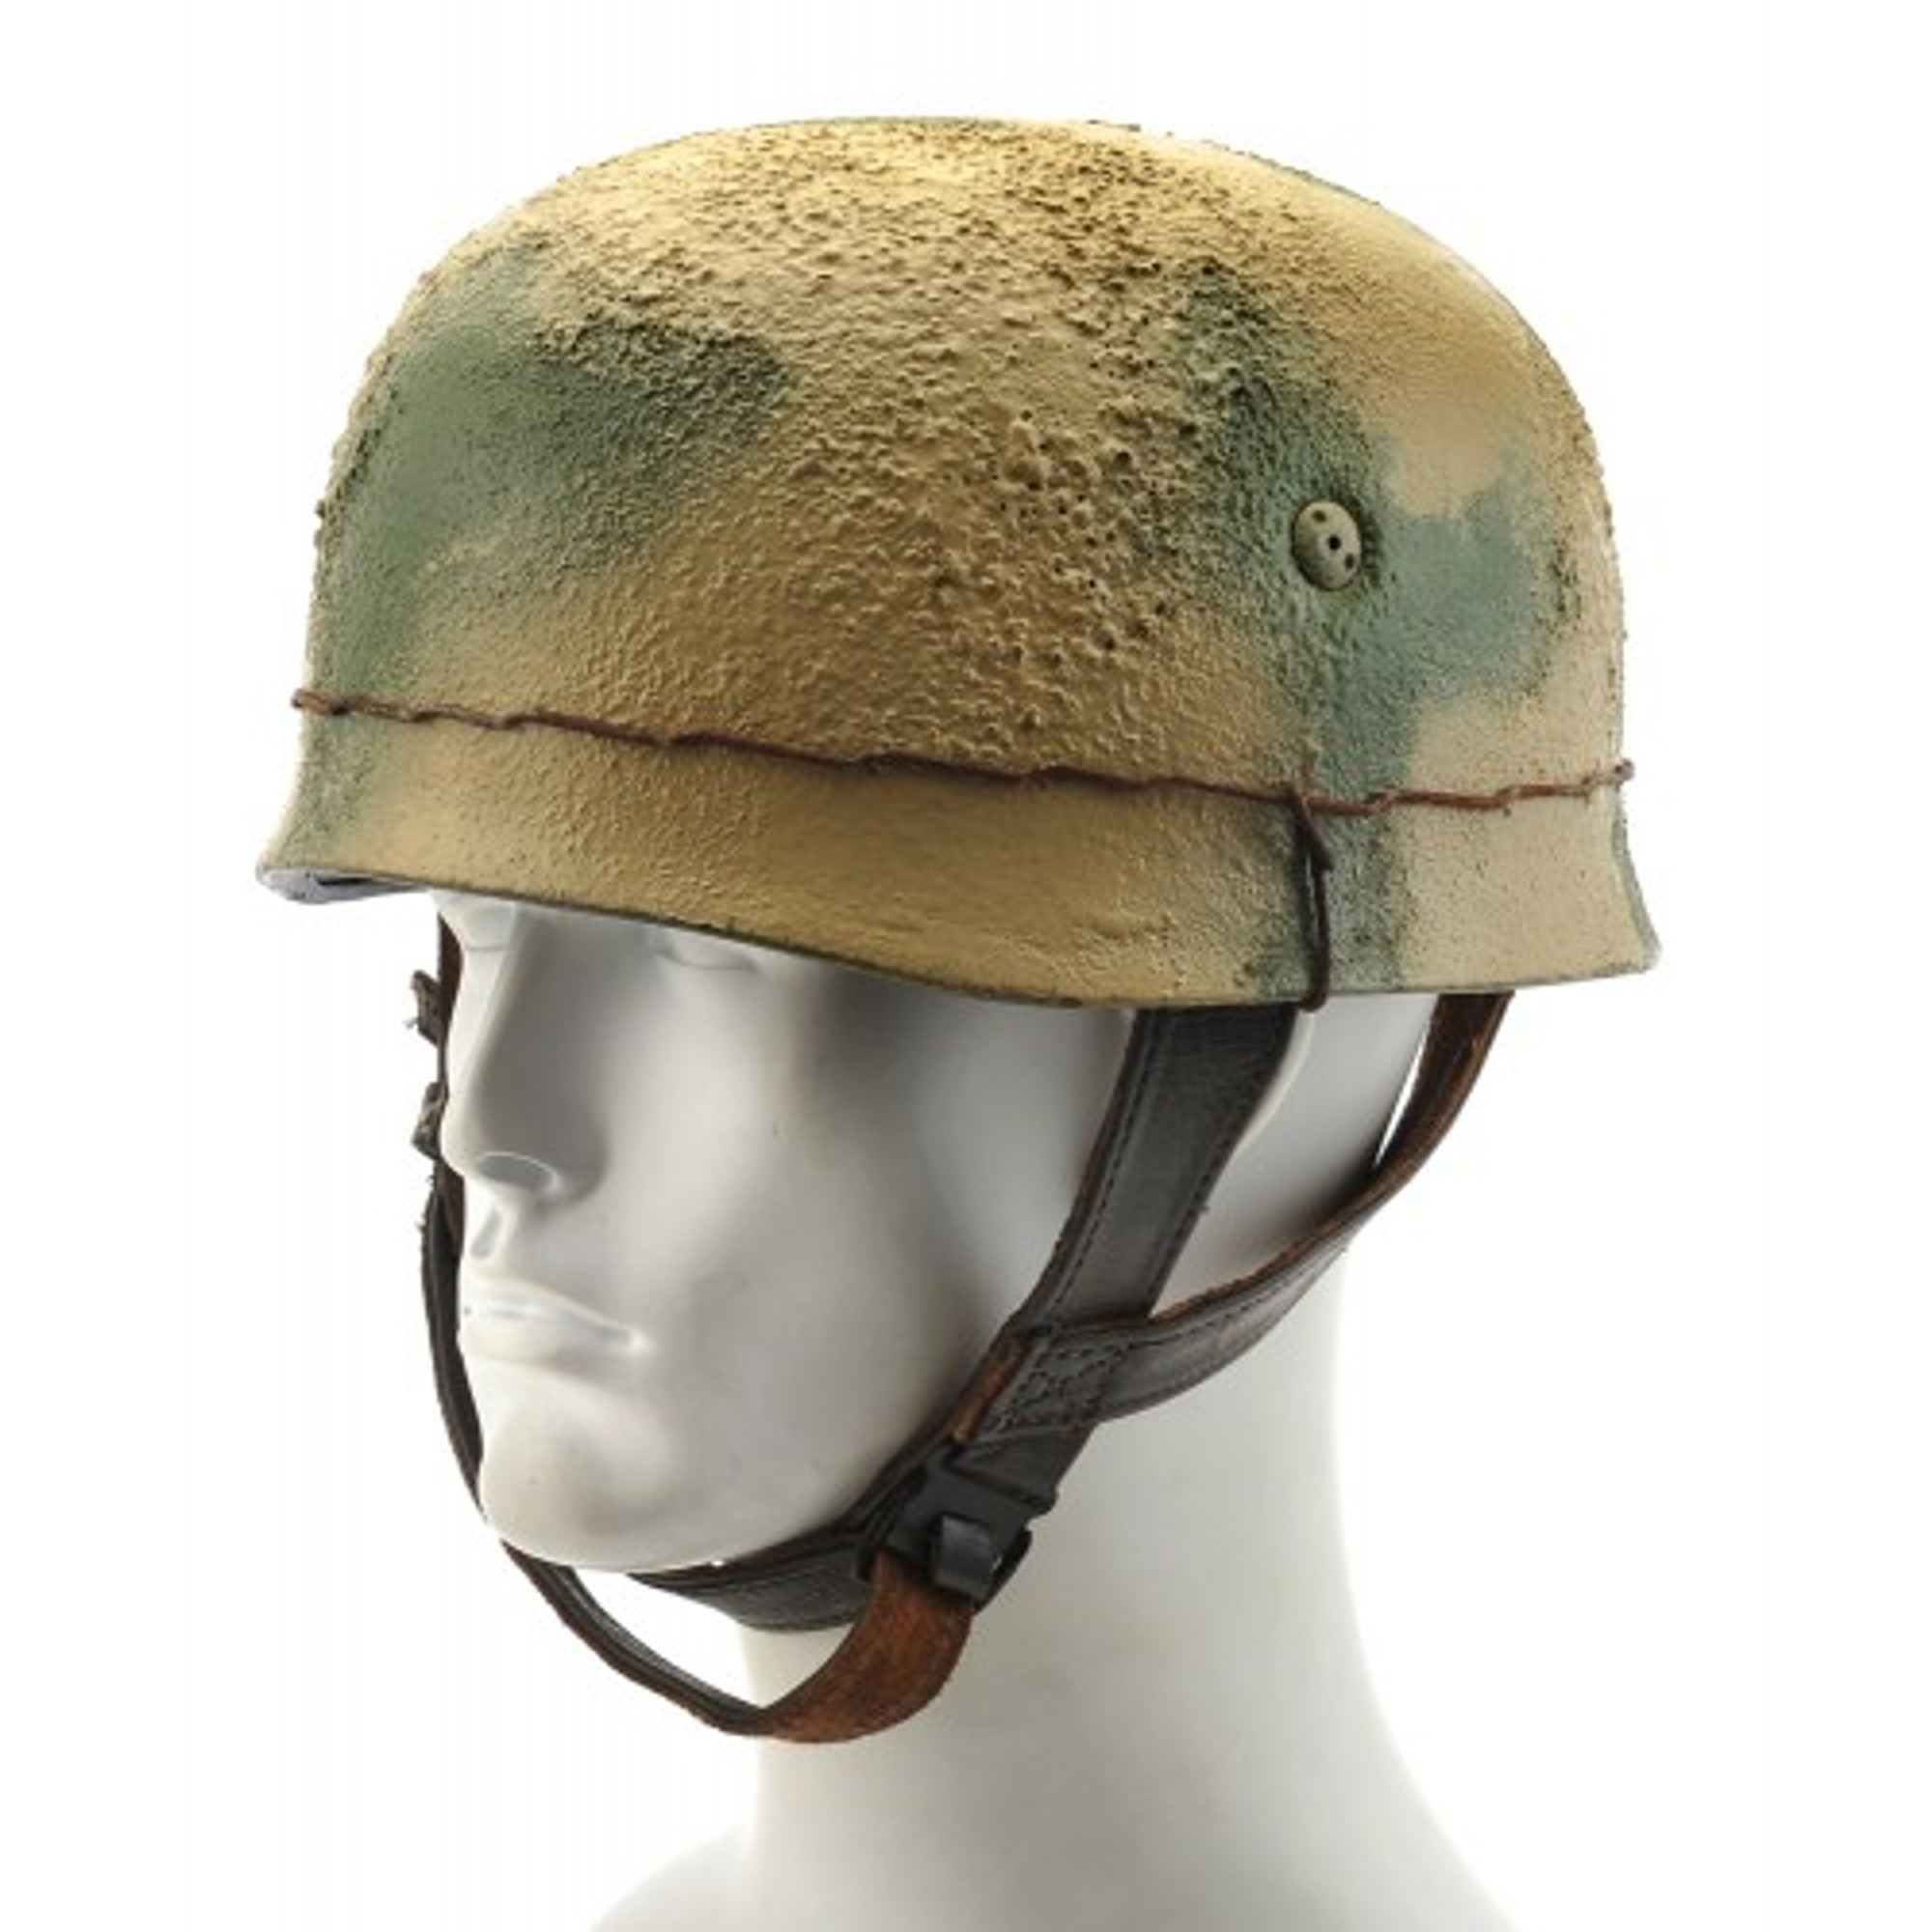 German WW2 Paratrooper M38 Fallschirmjager Helmet Green Tan Camouflage w/Texture & Wire